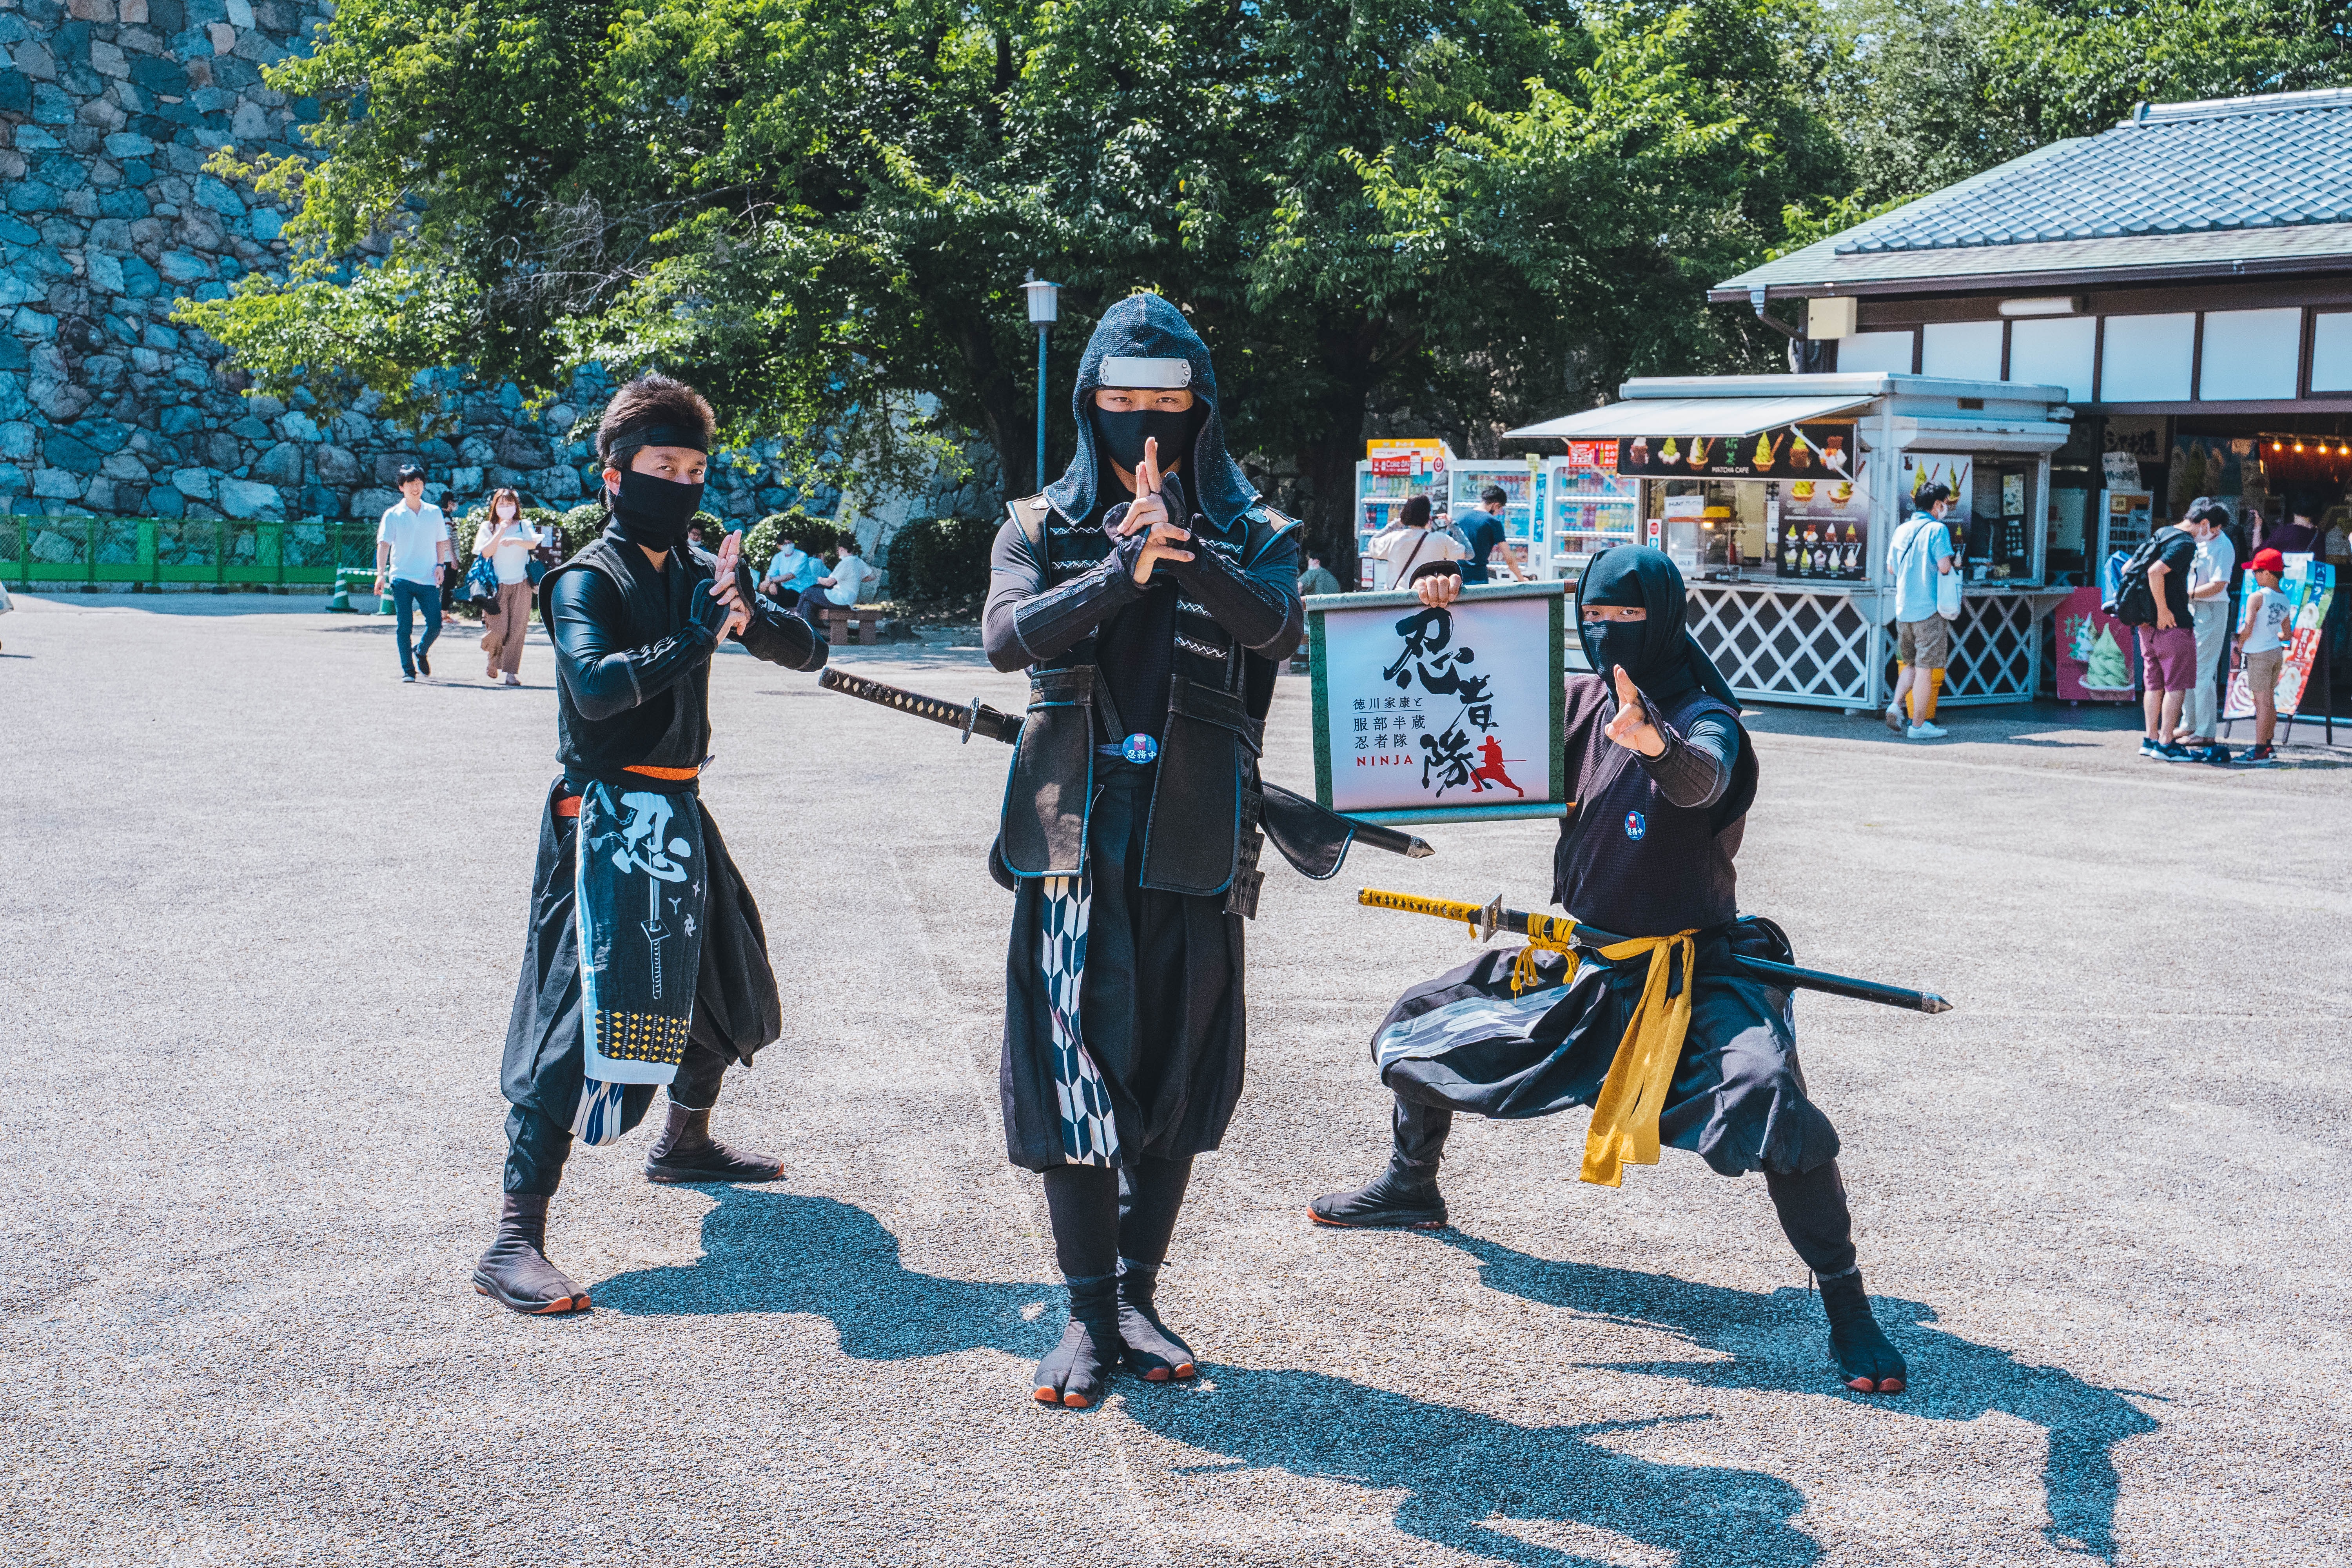 3 Ninjas